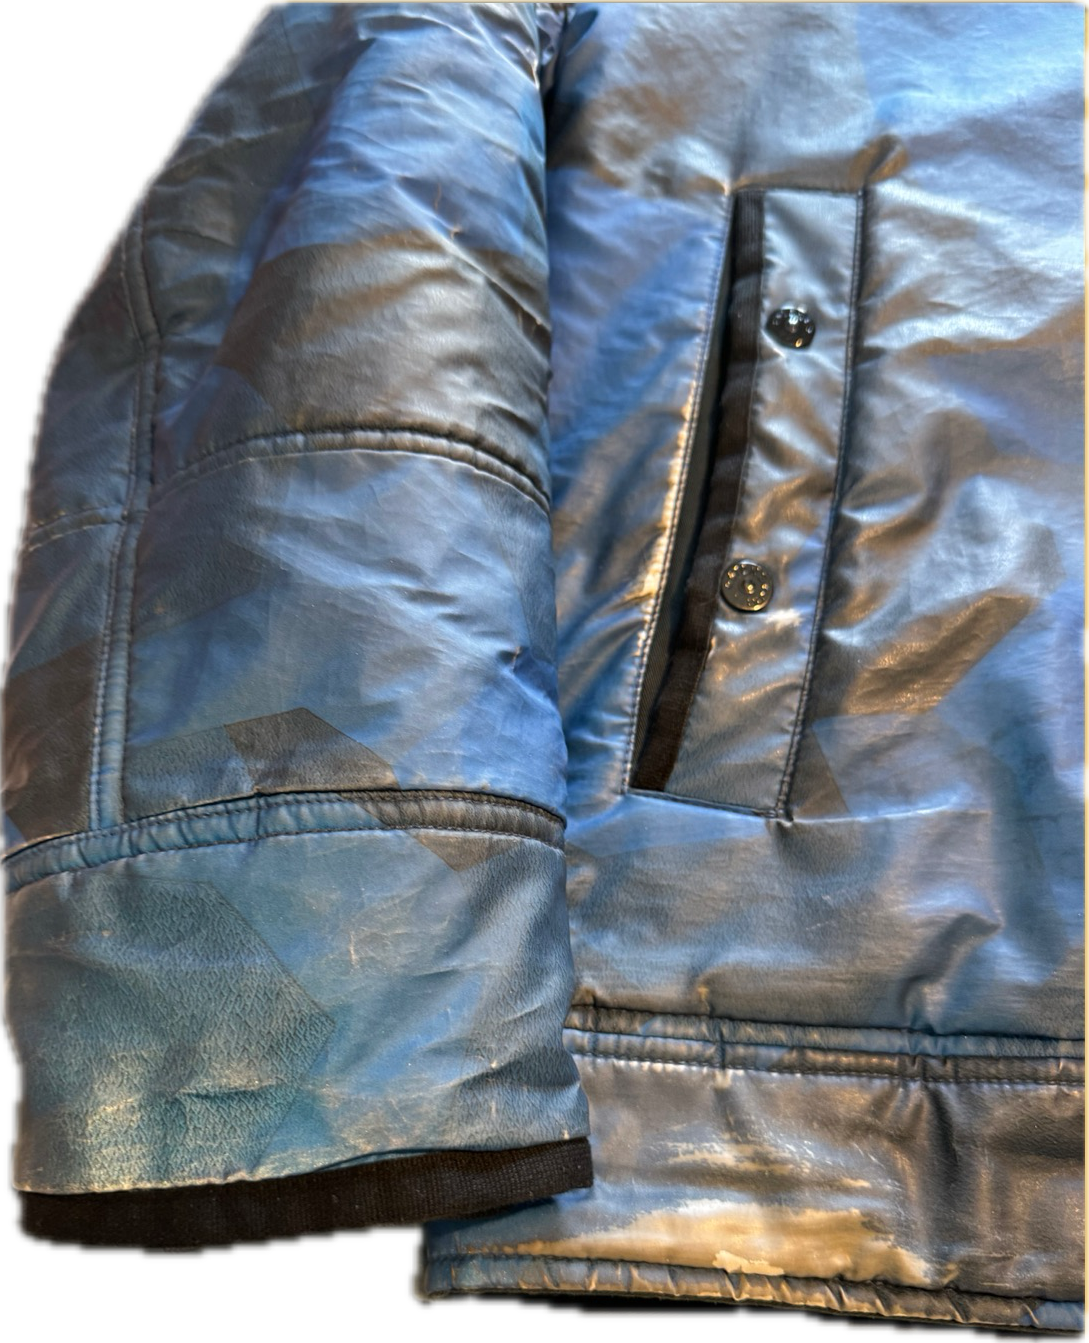 Stone Island 30th Anniversary ‘Camo Reflective’ Jacket - XL